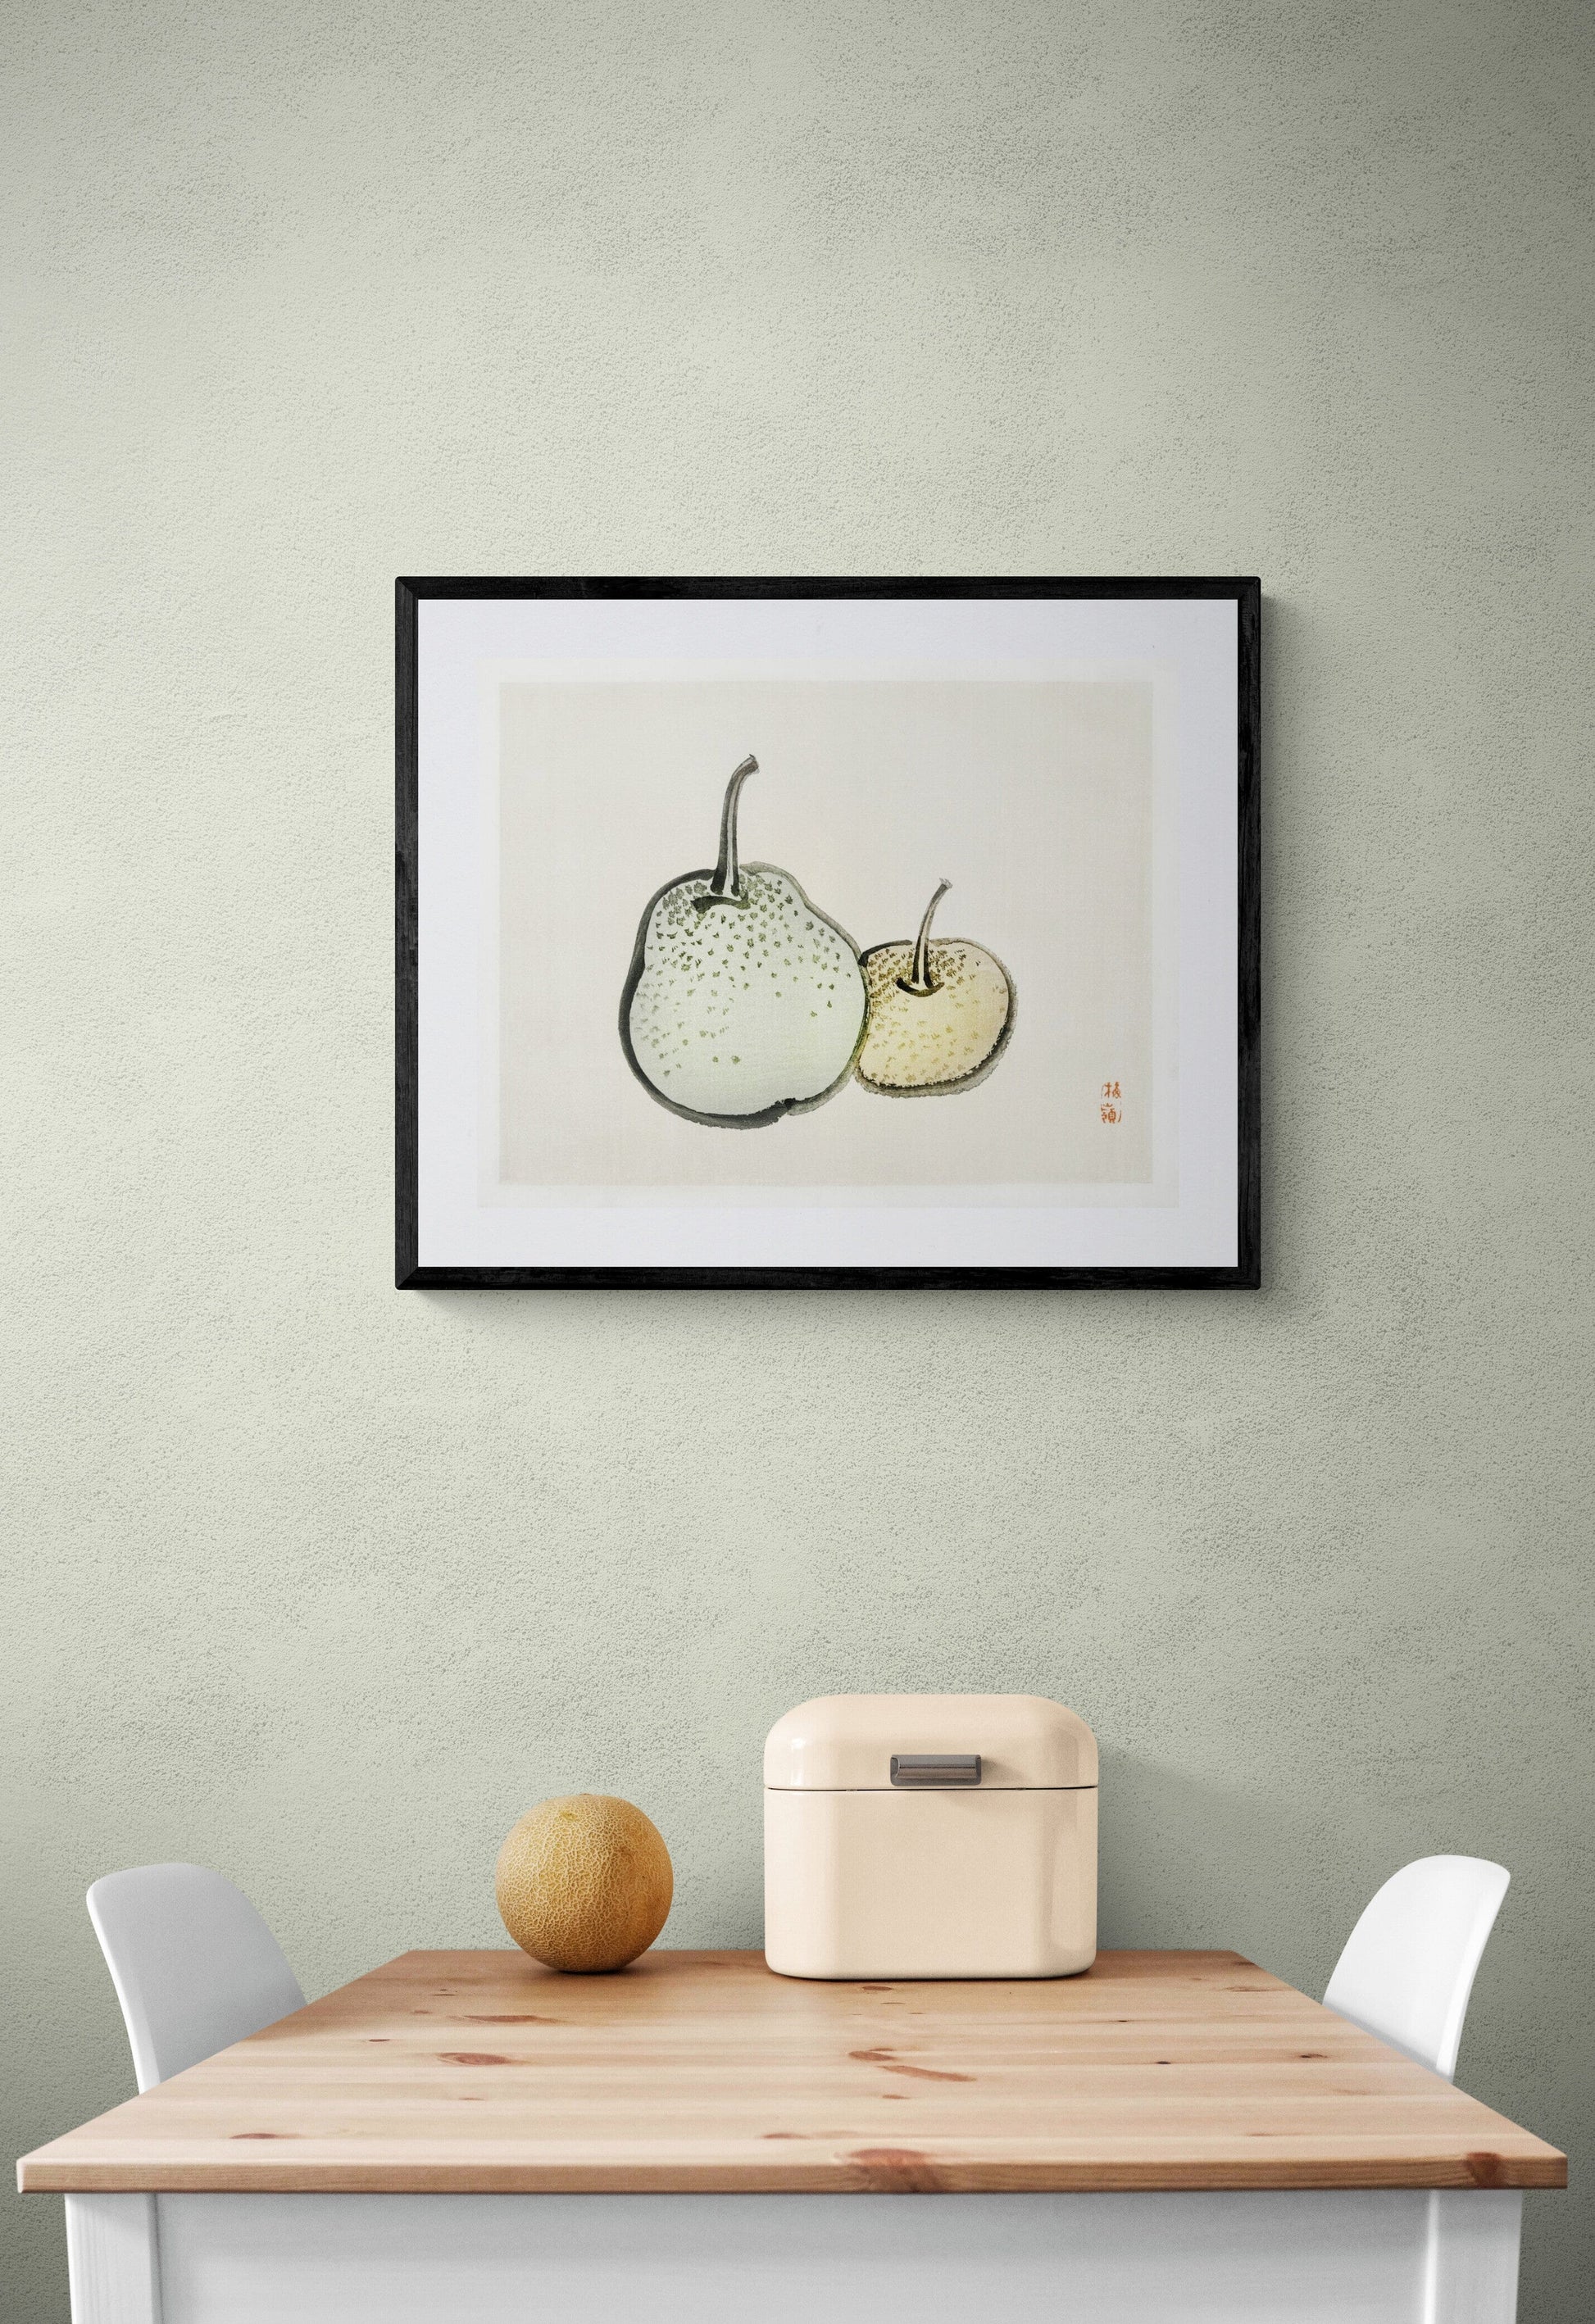 Asian pears (1800s) | Vintage pear prints | Kōno Bairei Posters, Prints, & Visual Artwork The Trumpet Shop   